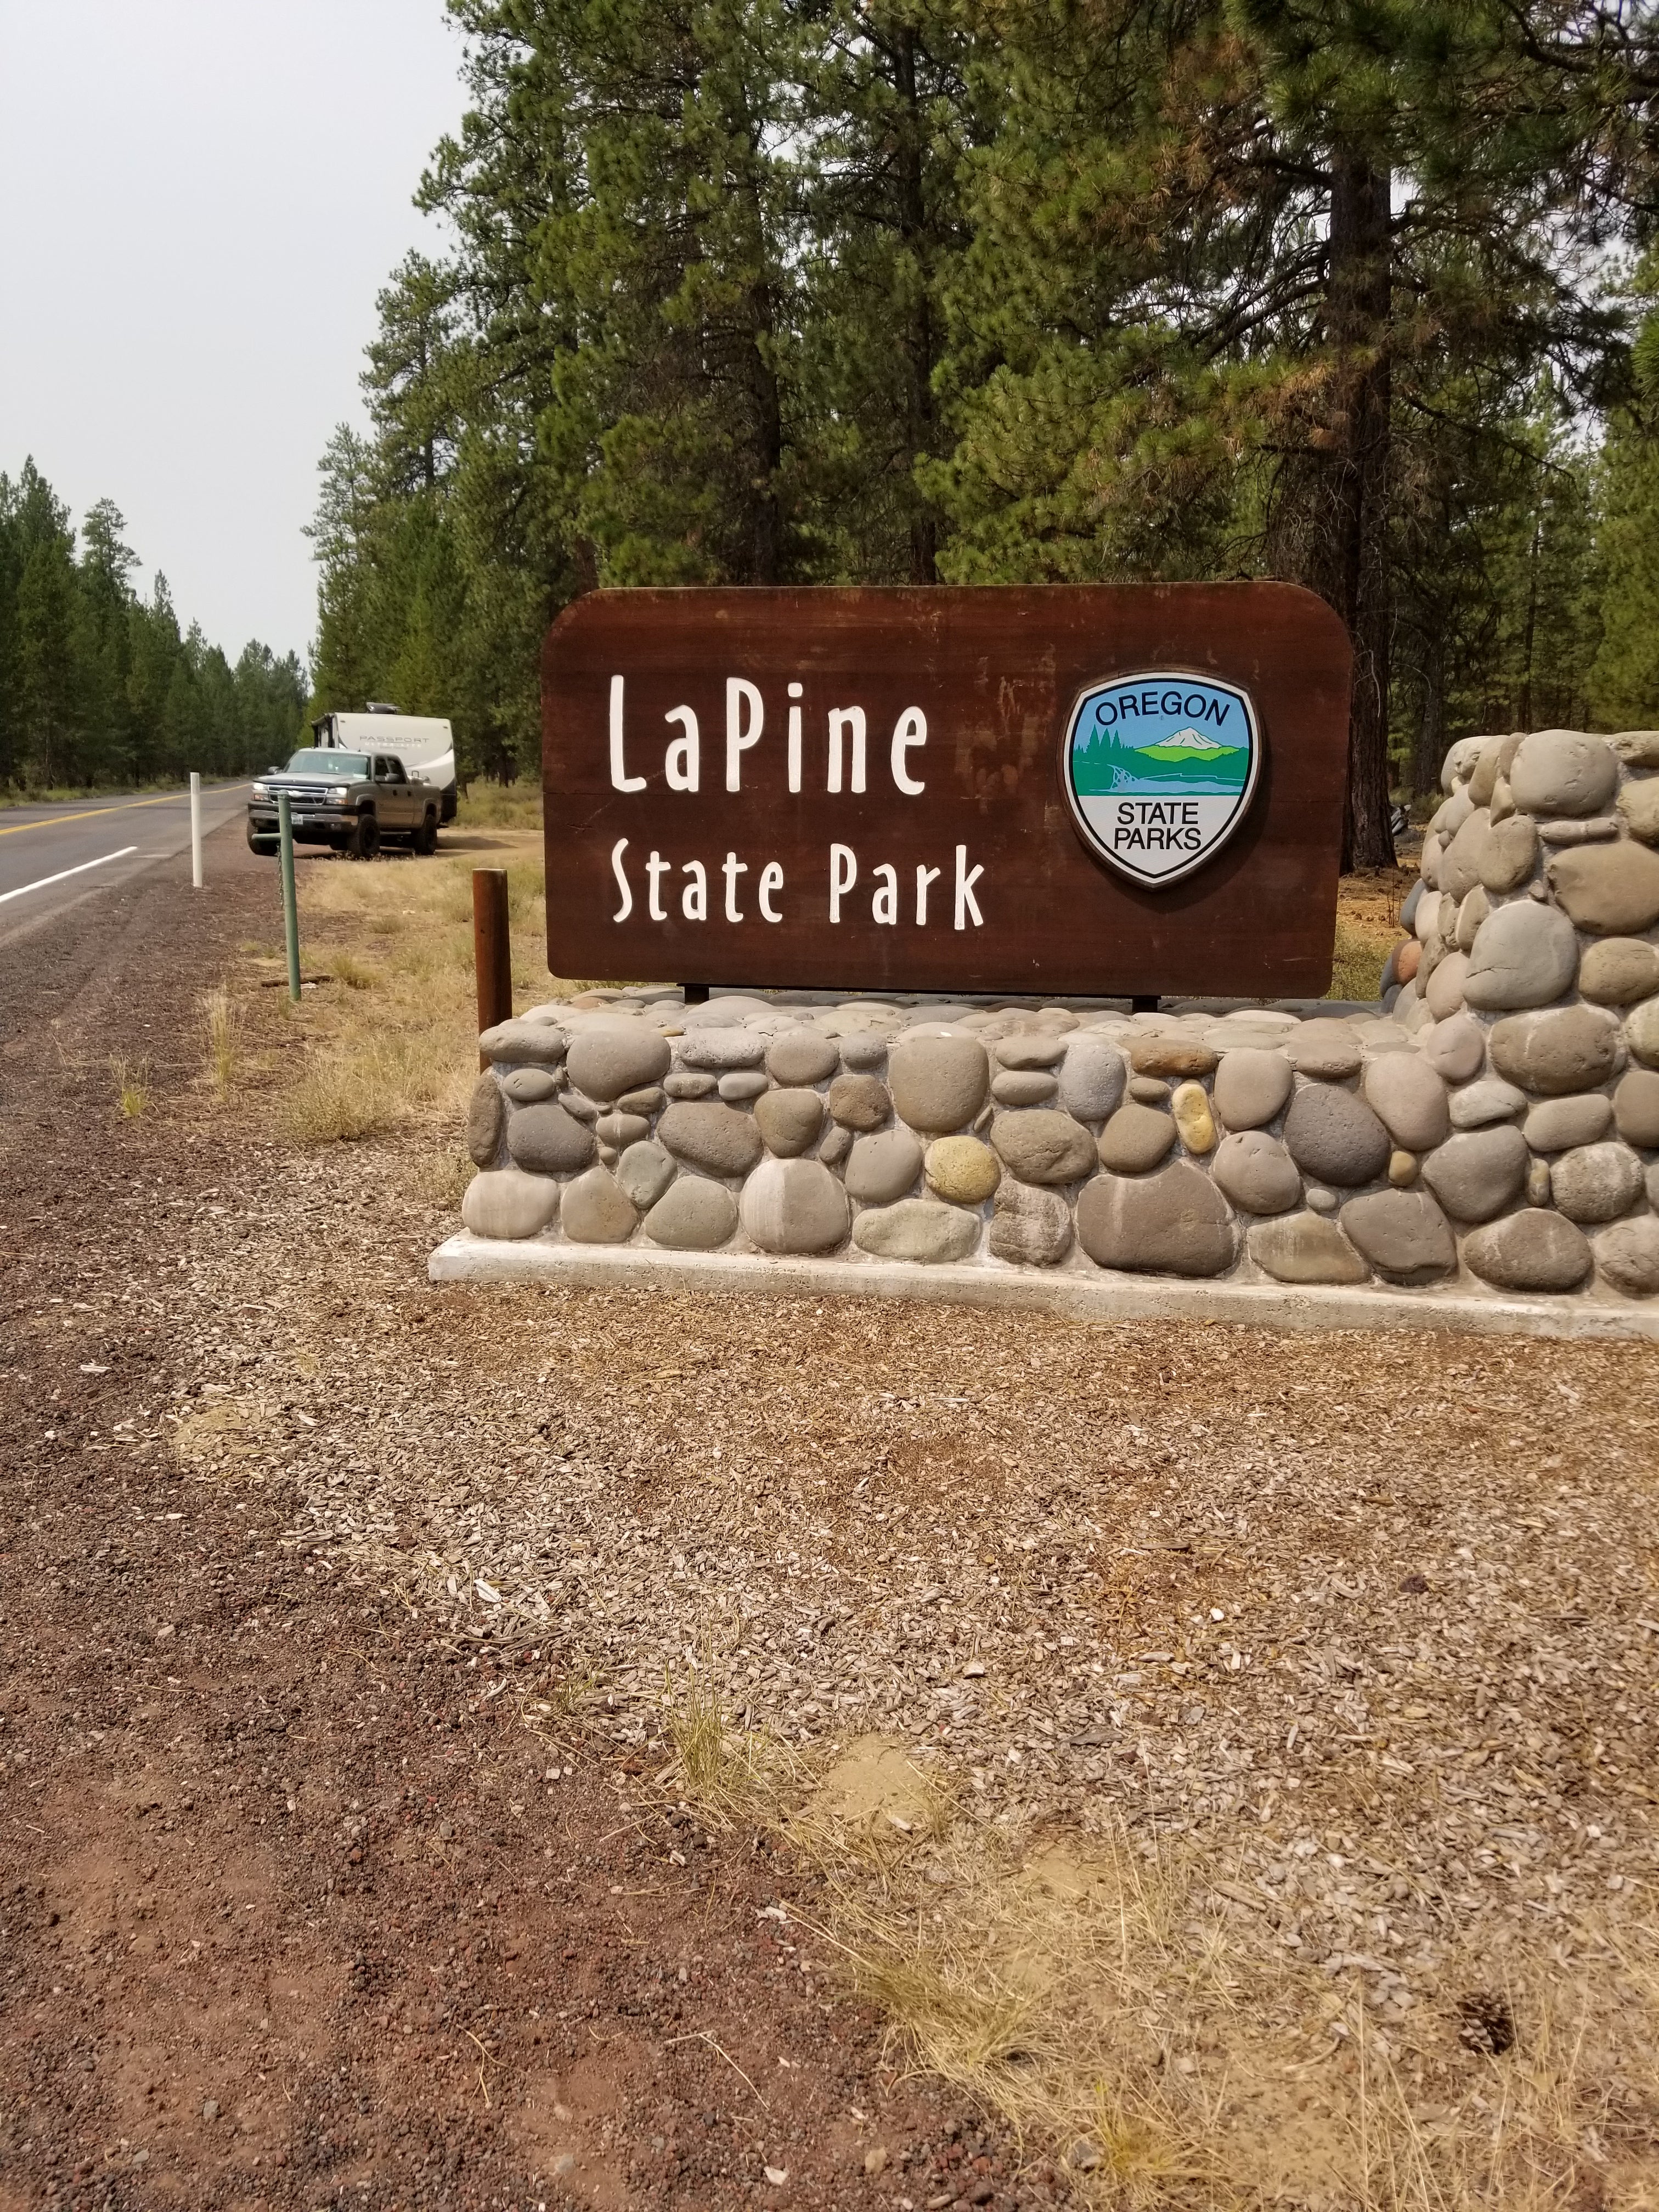 LaPine State Park